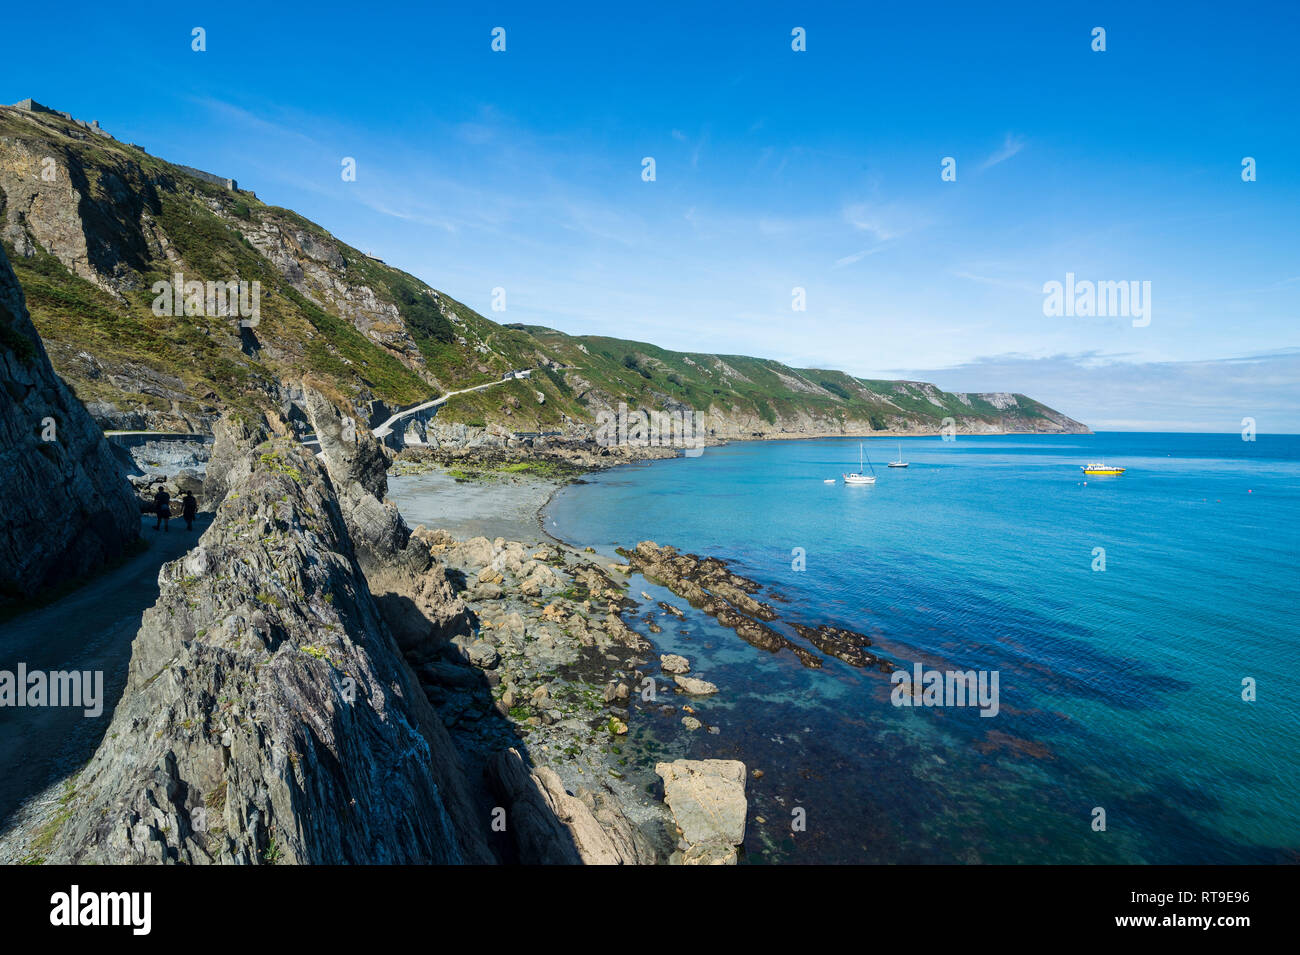 United Kingdom, England, Devon, Island of Lundy, Bristol channel, coast and beach Stock Photo